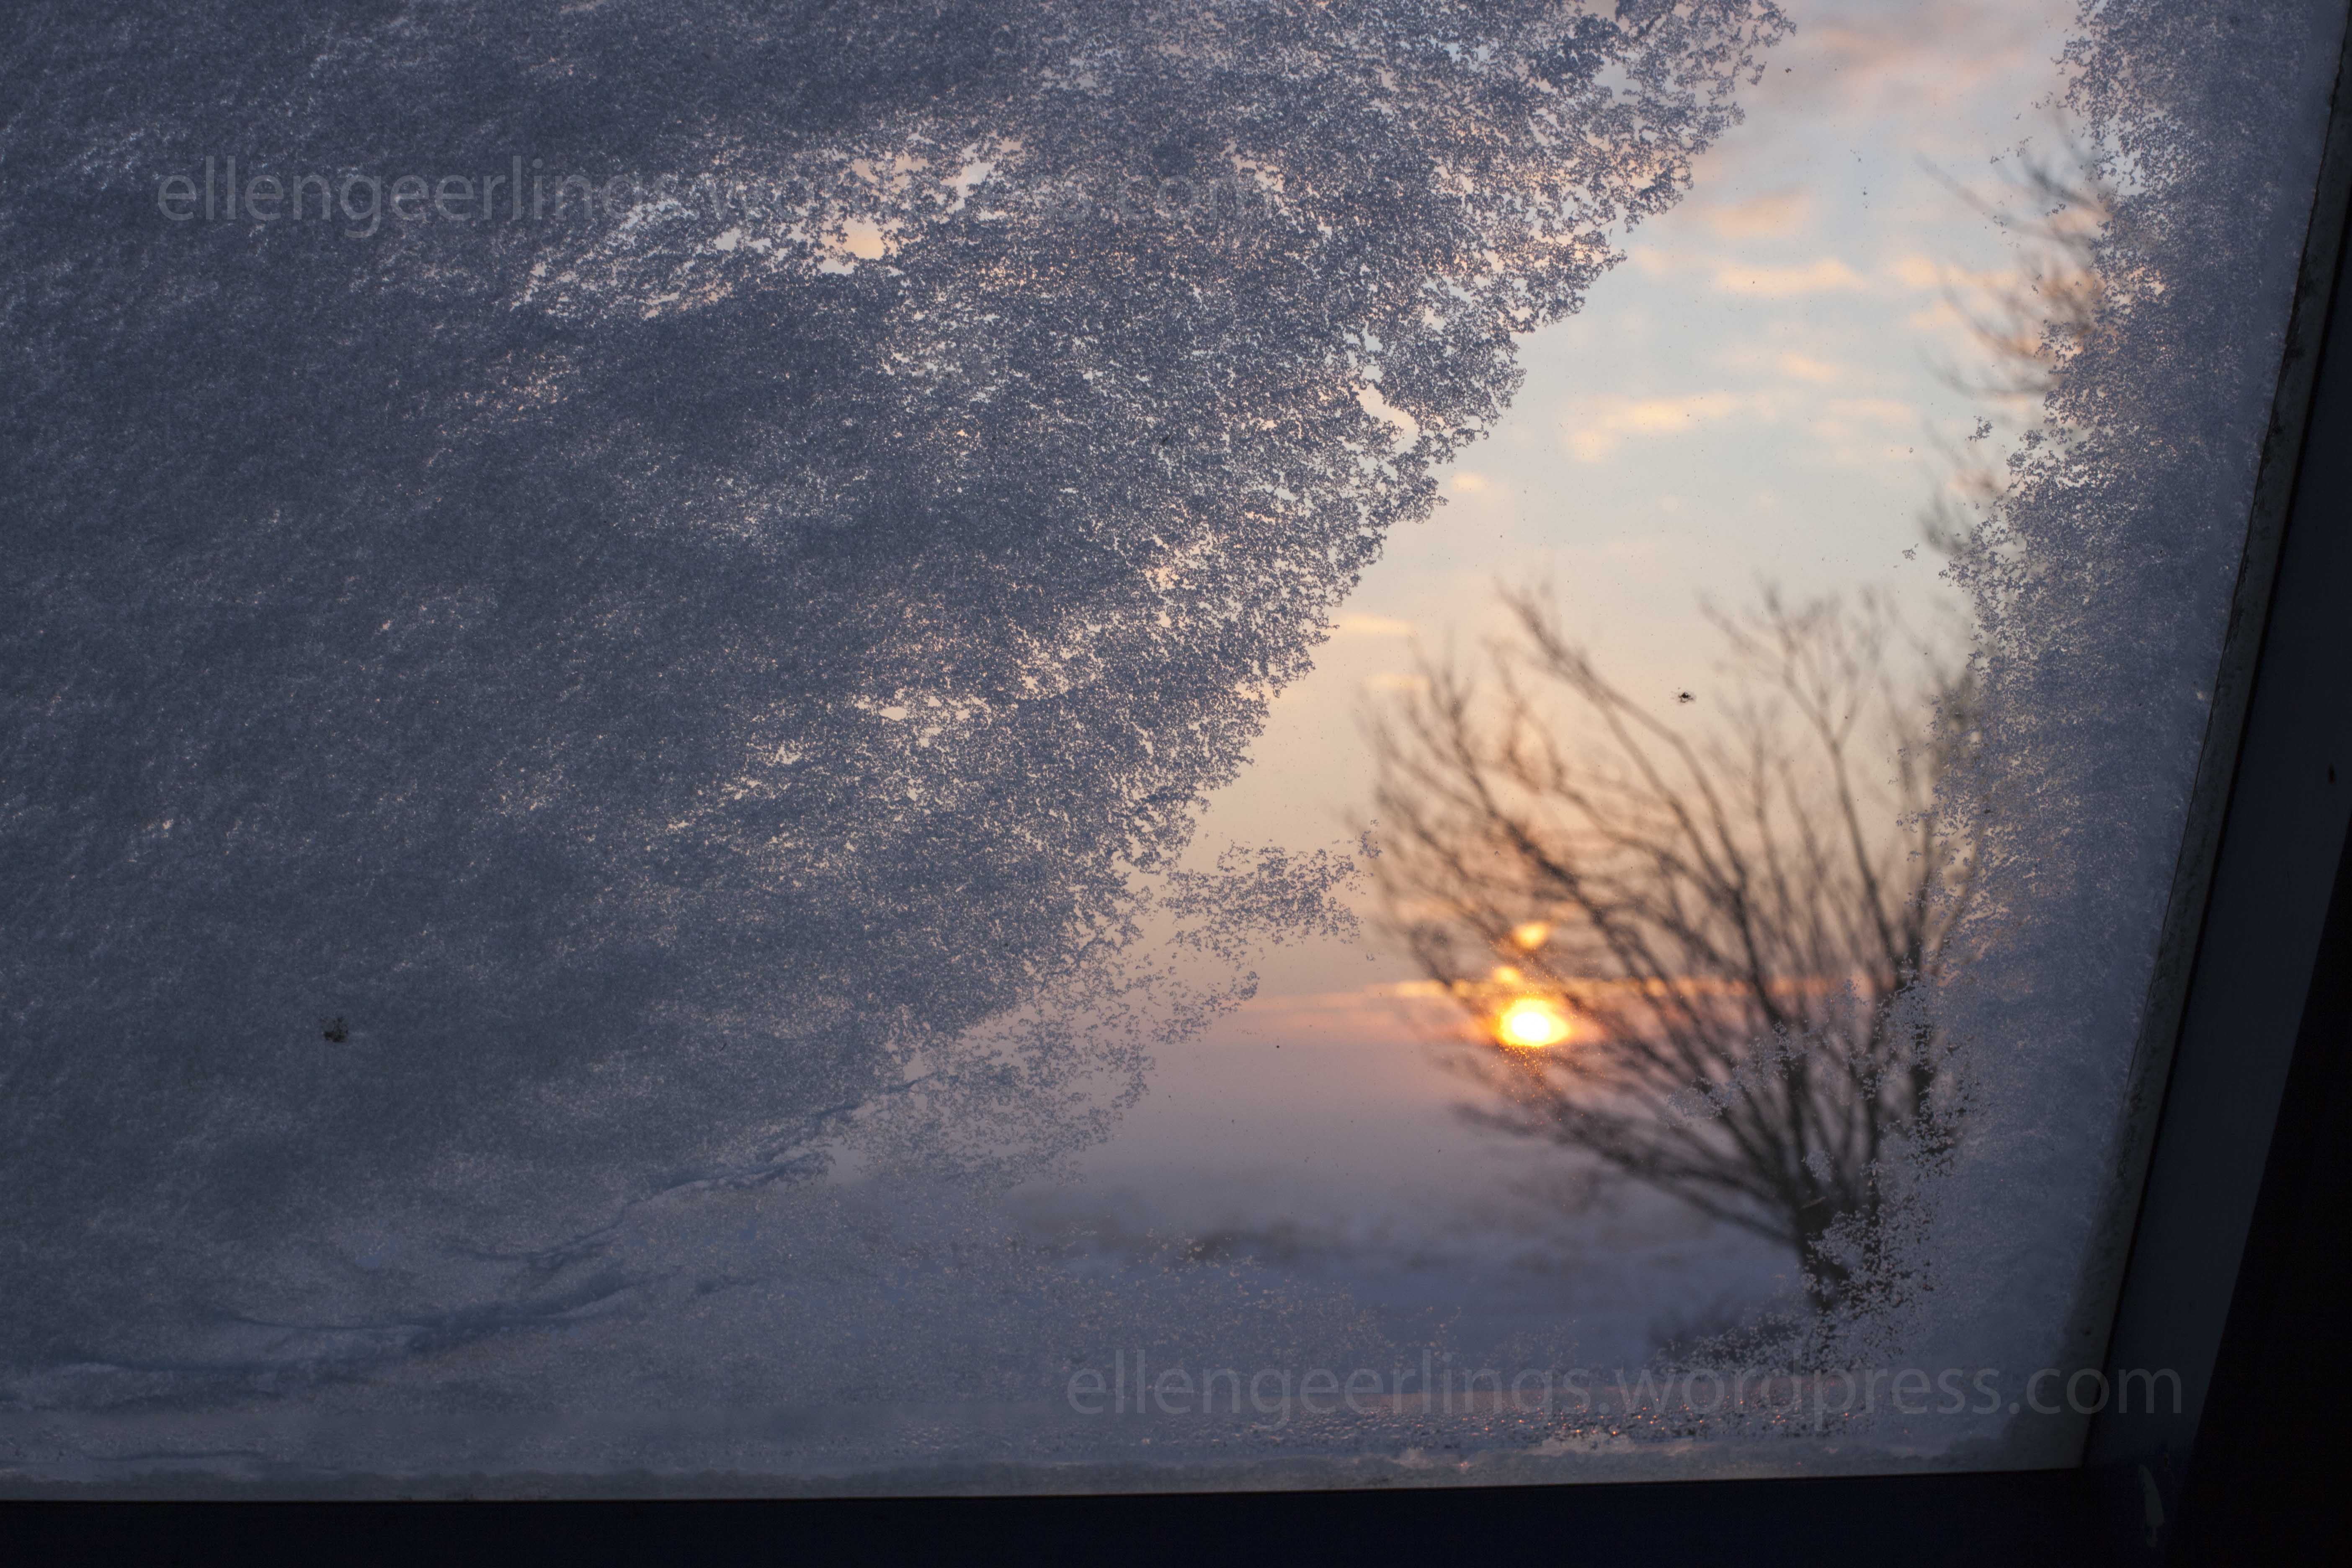 A beautiful snowy morning | Ellen Geerlings's Blog